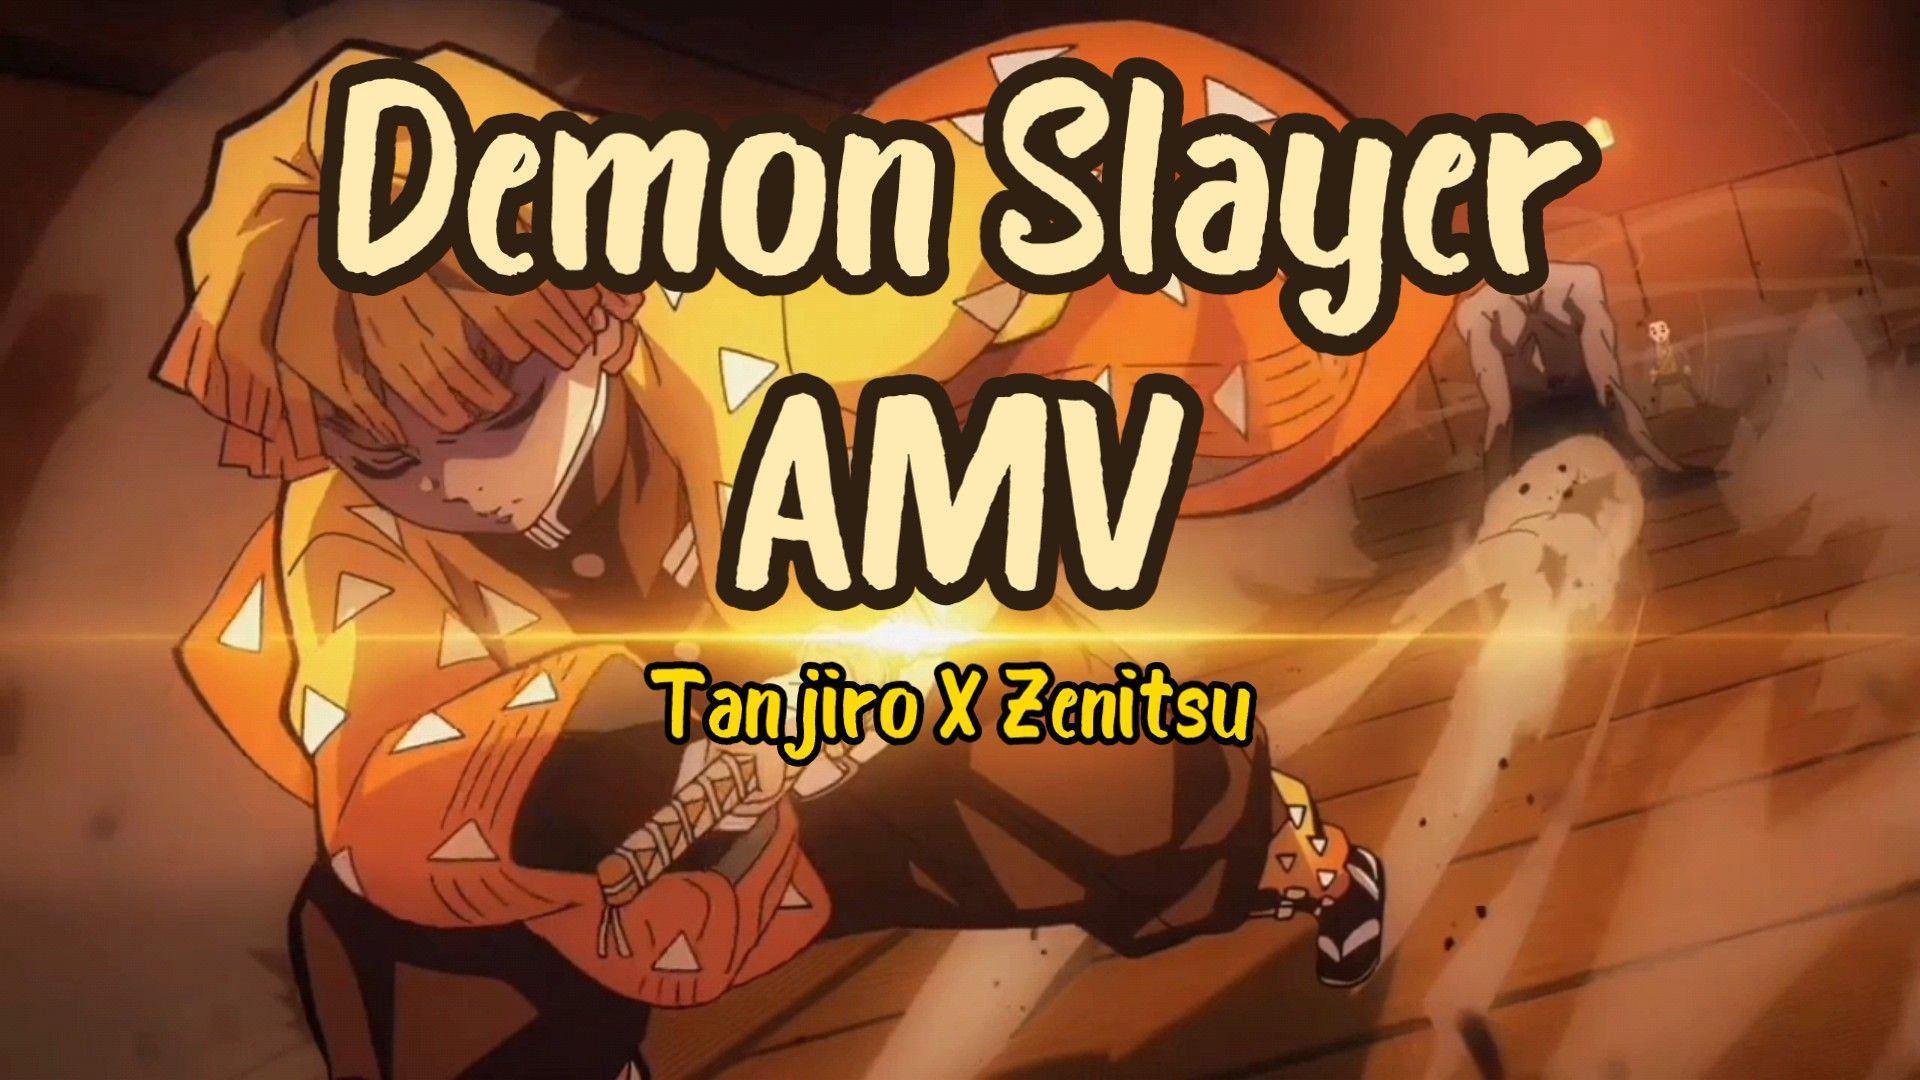 Kimetsu no Yaiba Temporada 2 Capitulo 1 Arco Distrito Rojo (Adelanto  Completo) - Demon Slayer 2 